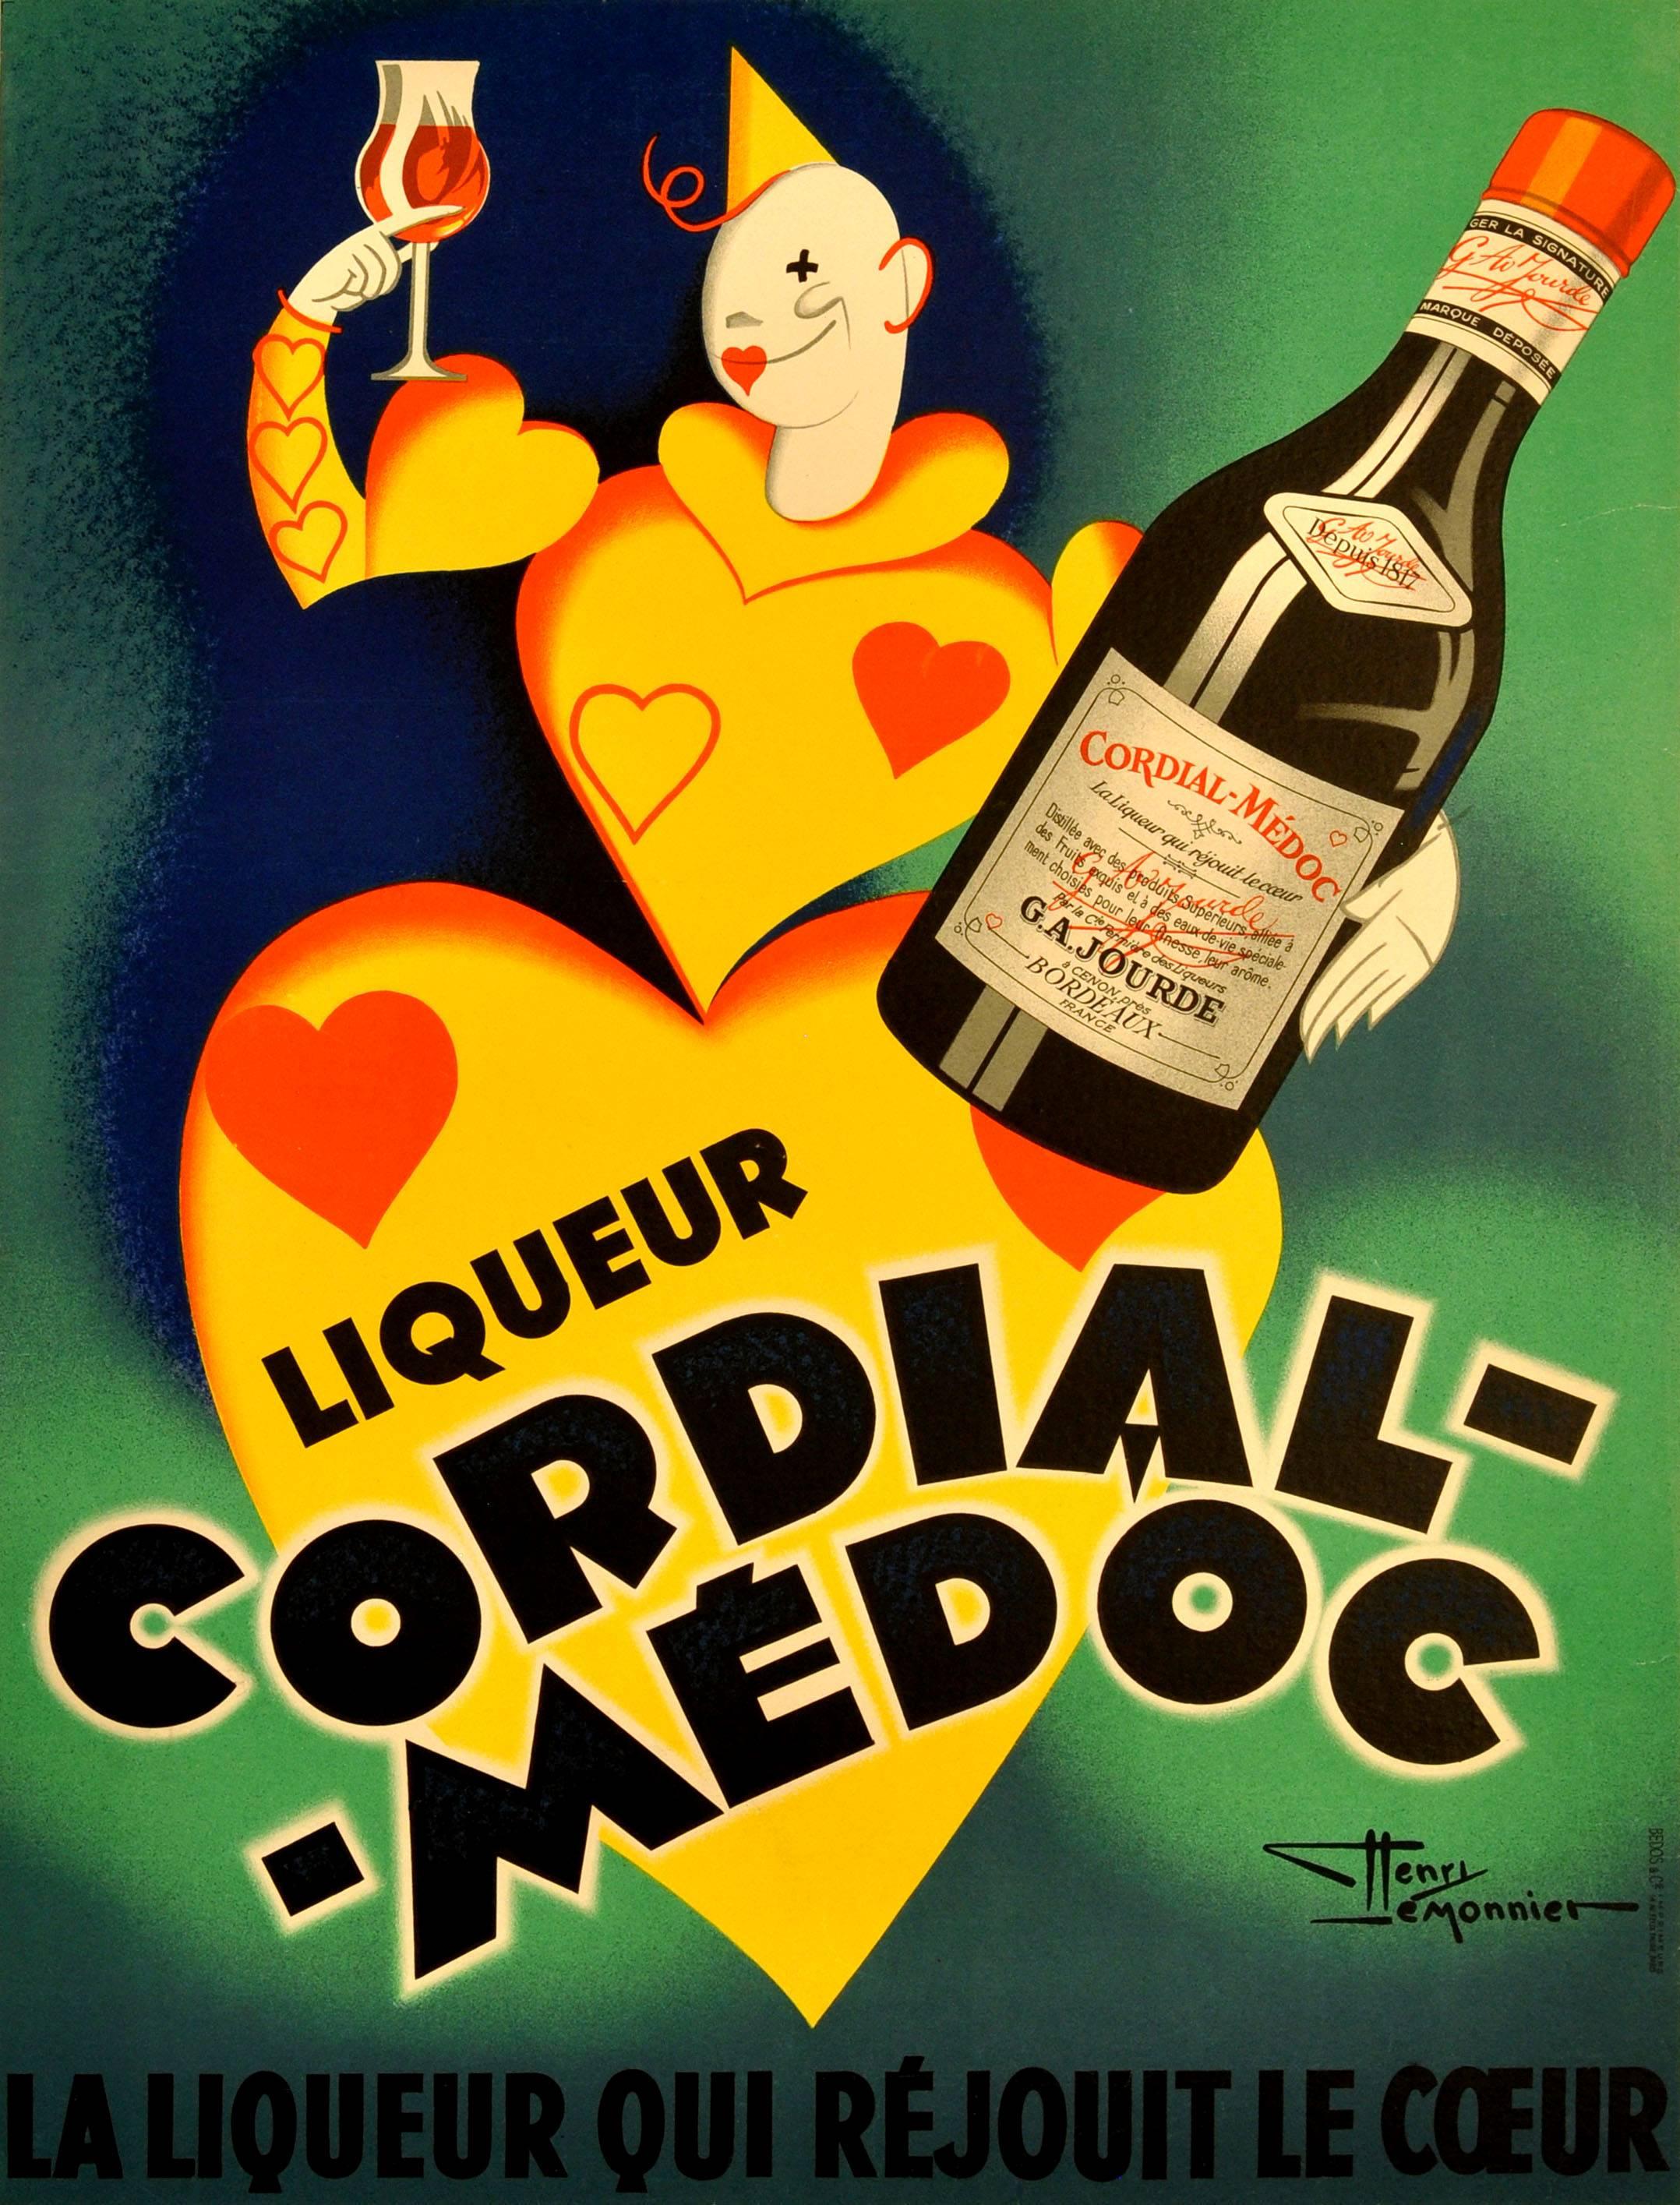 Henry Le Monnier Print - Original Vintage 1920s Art Deco Drink Advertising Poster: Liqueur Cordial Medoc